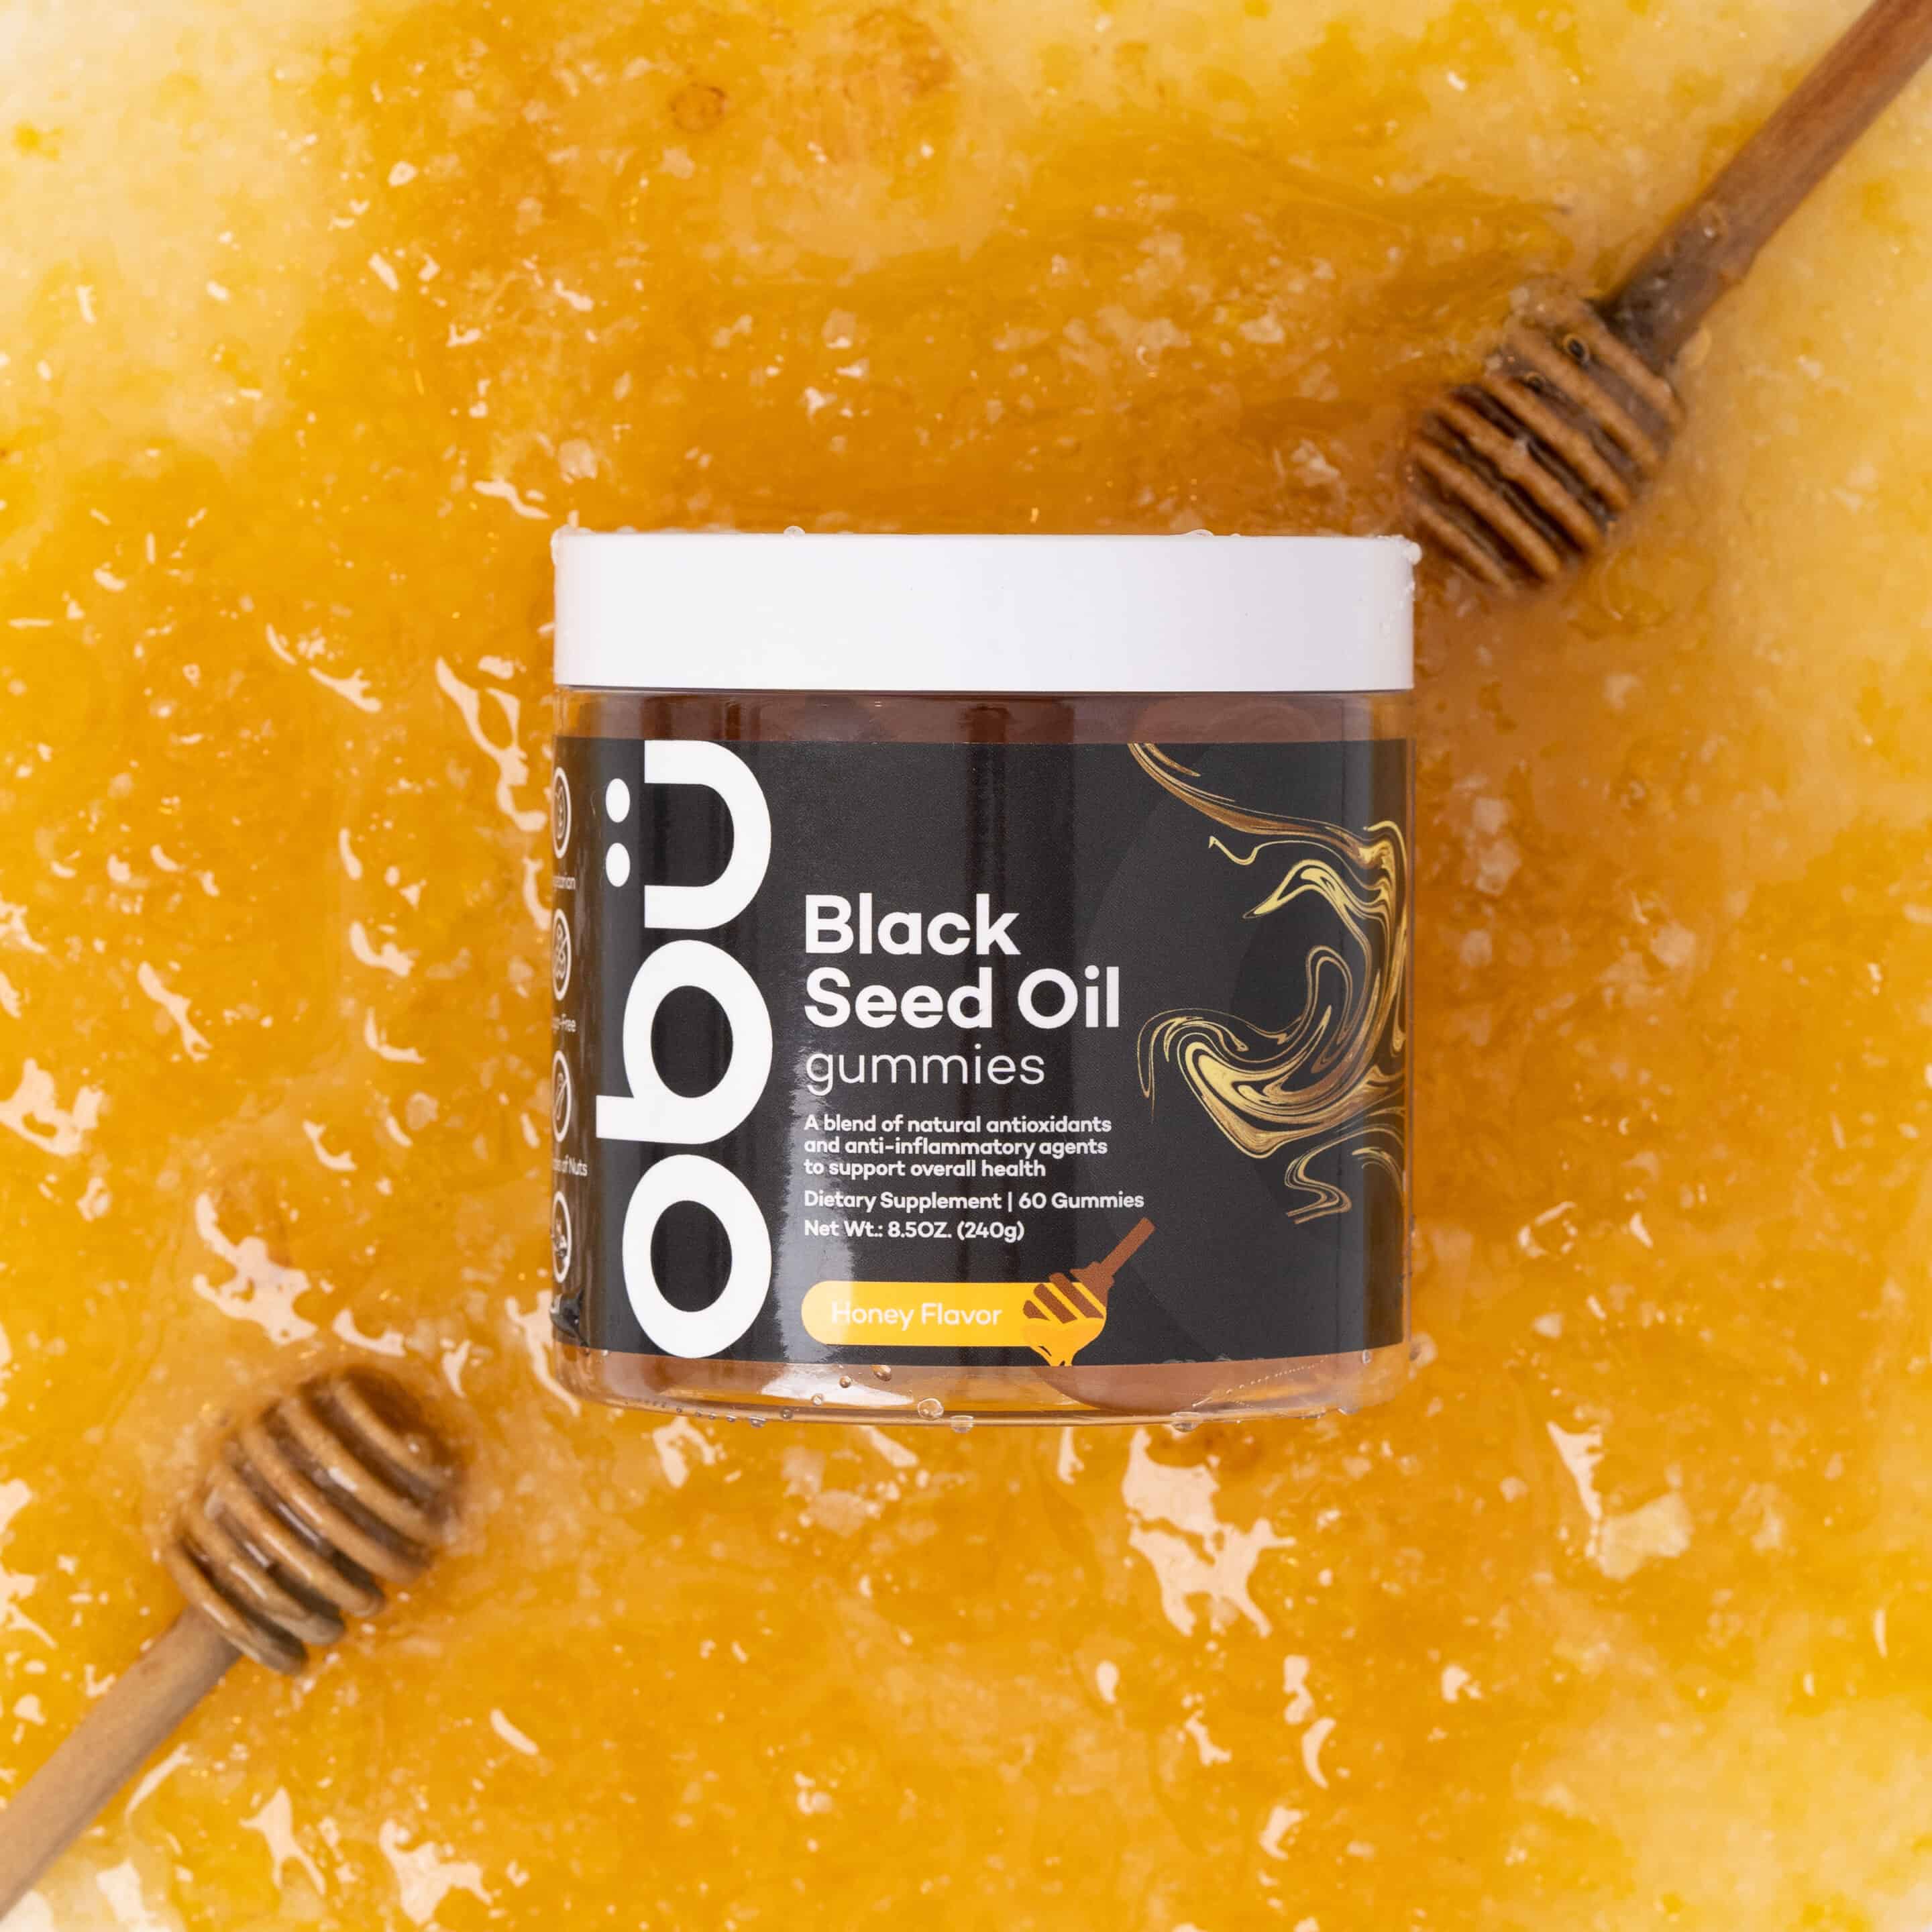 Obu Nutrition Black Seed Oil with Honey Flavor 60 gummies